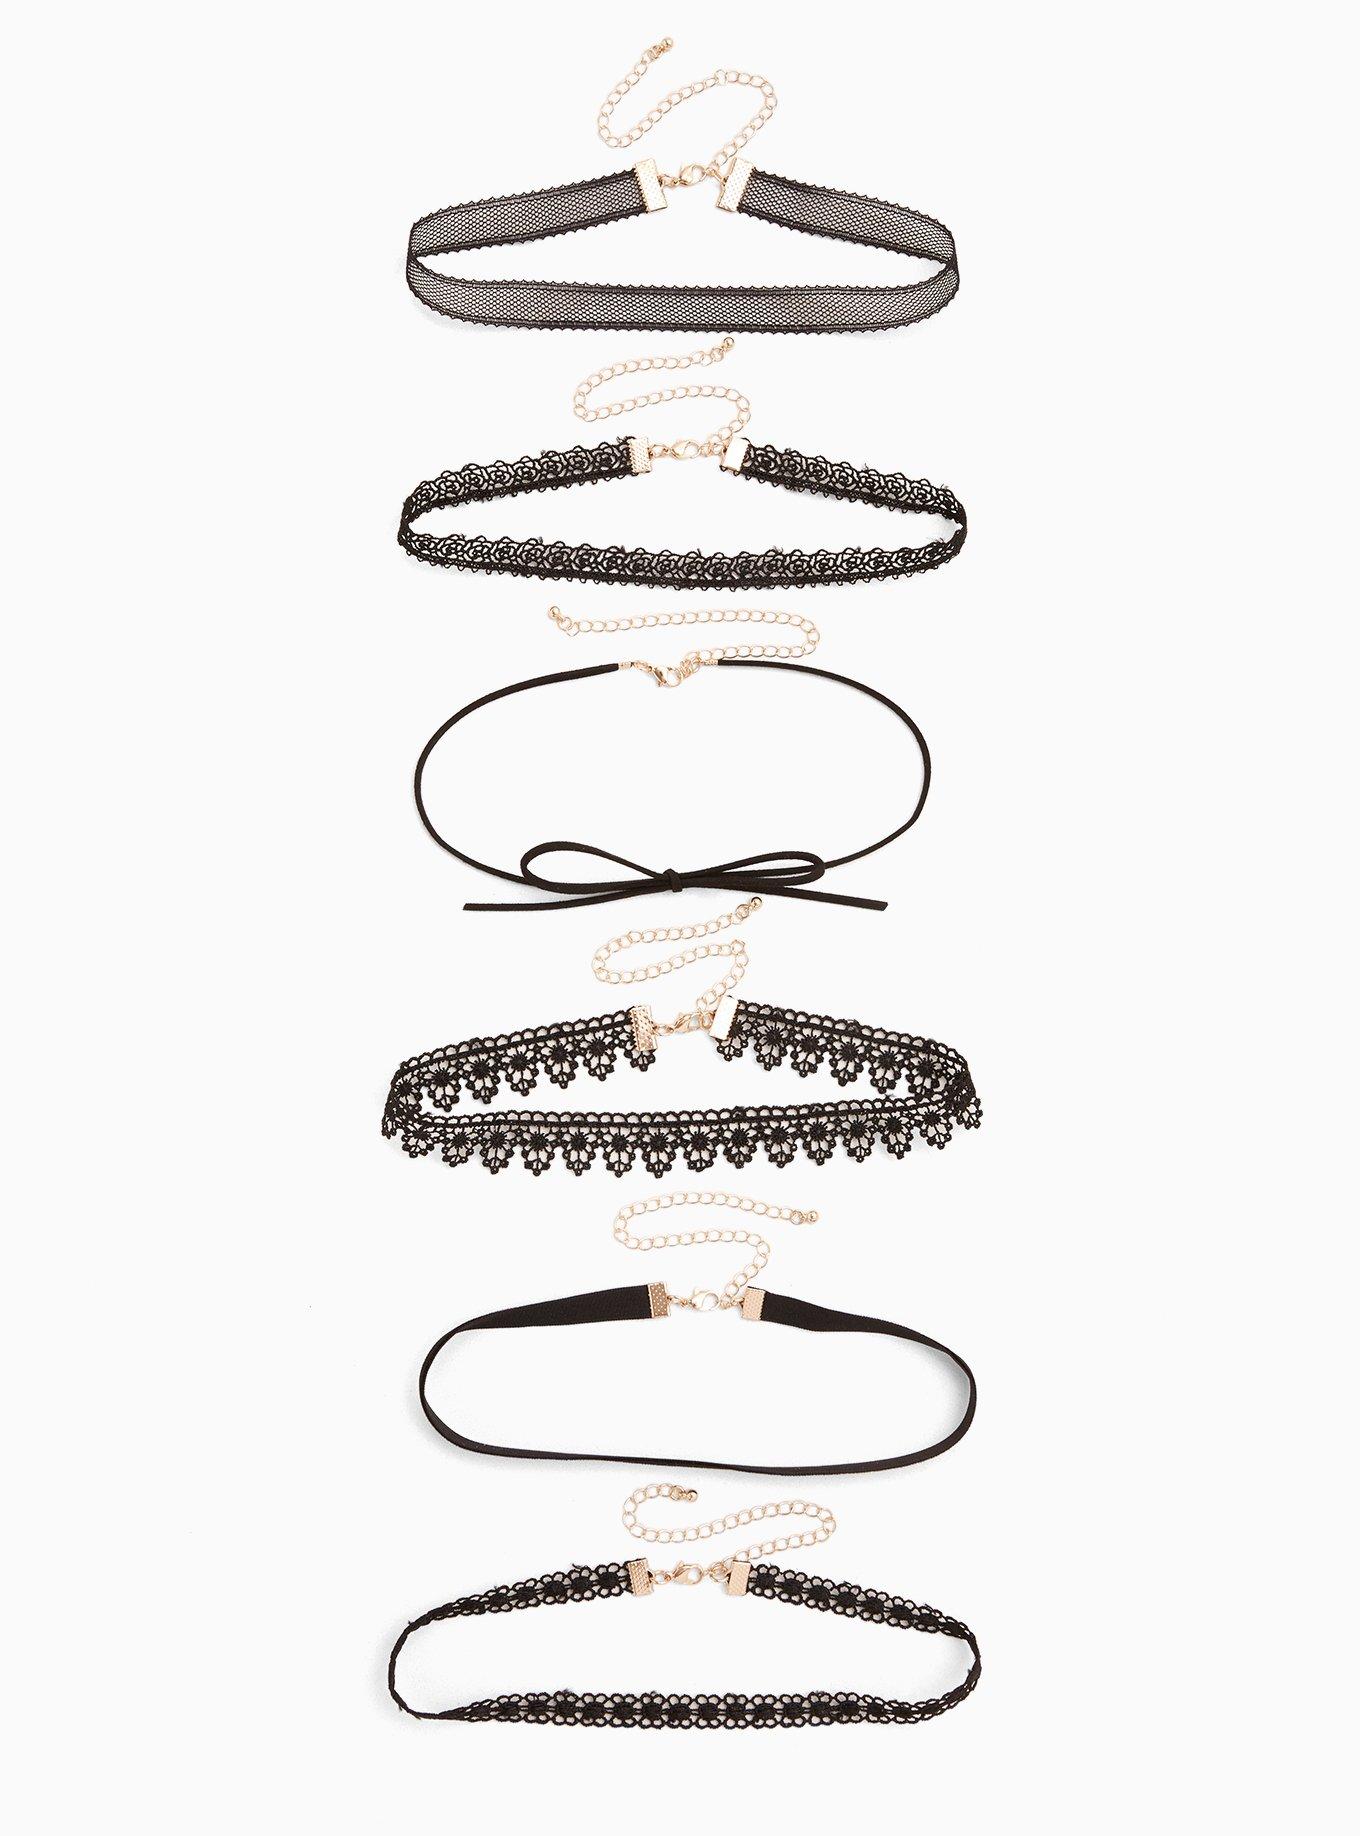 Stranger Bracelet Necklace Pack - Stylish Jewelry Set for Teen Girls -  Perfect C